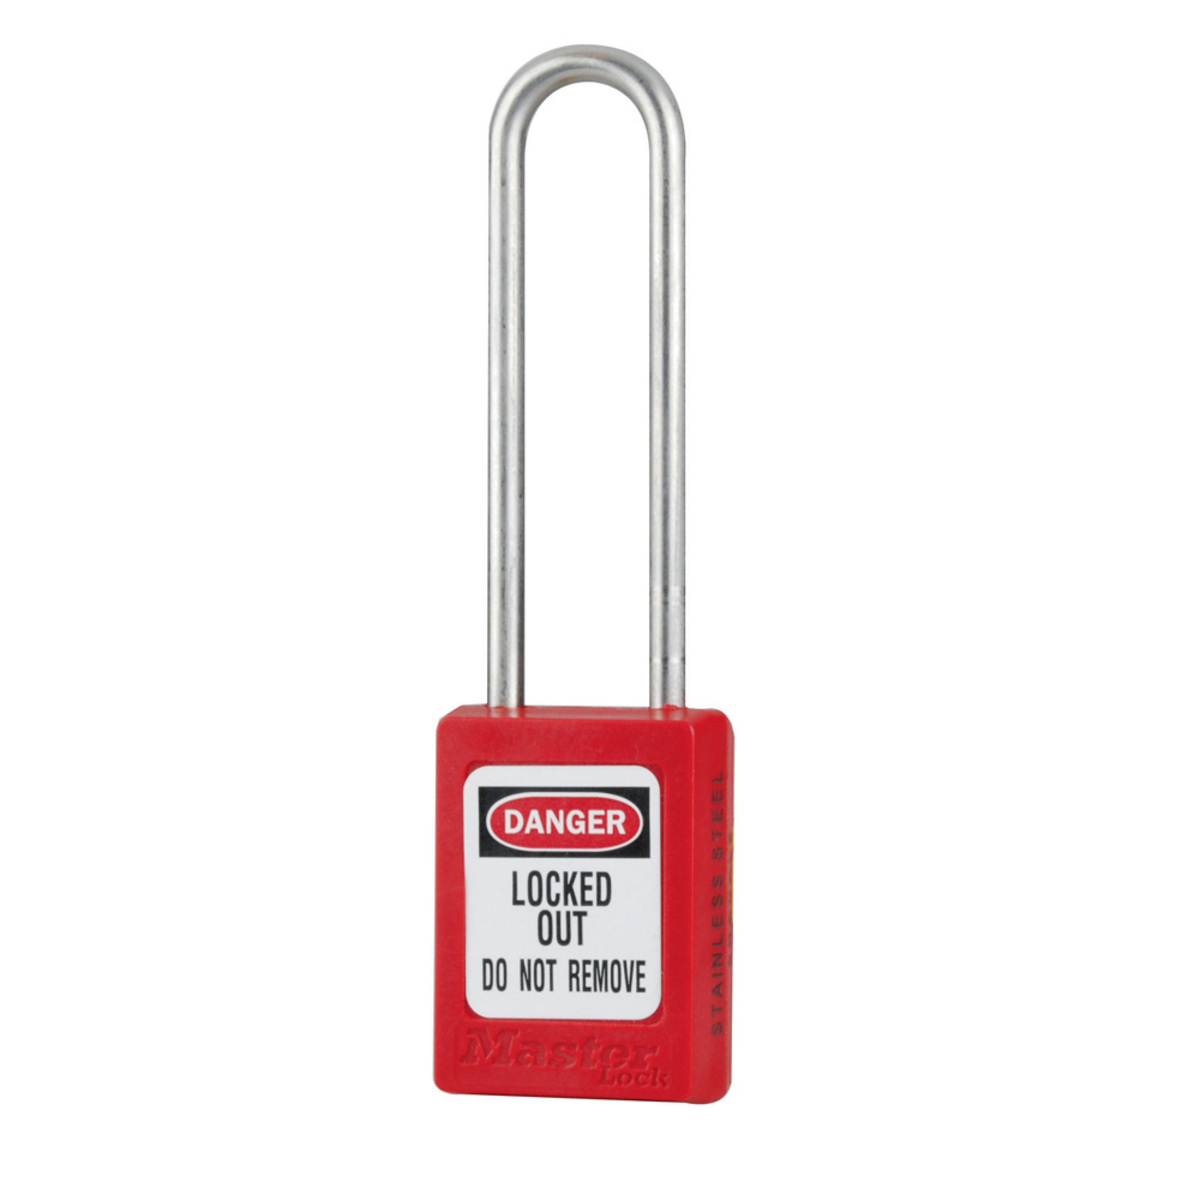 Master Lock® Red Thermoplastic Zenex™ 6 Pin Tumbler Padlock Stainless Steel Shackle